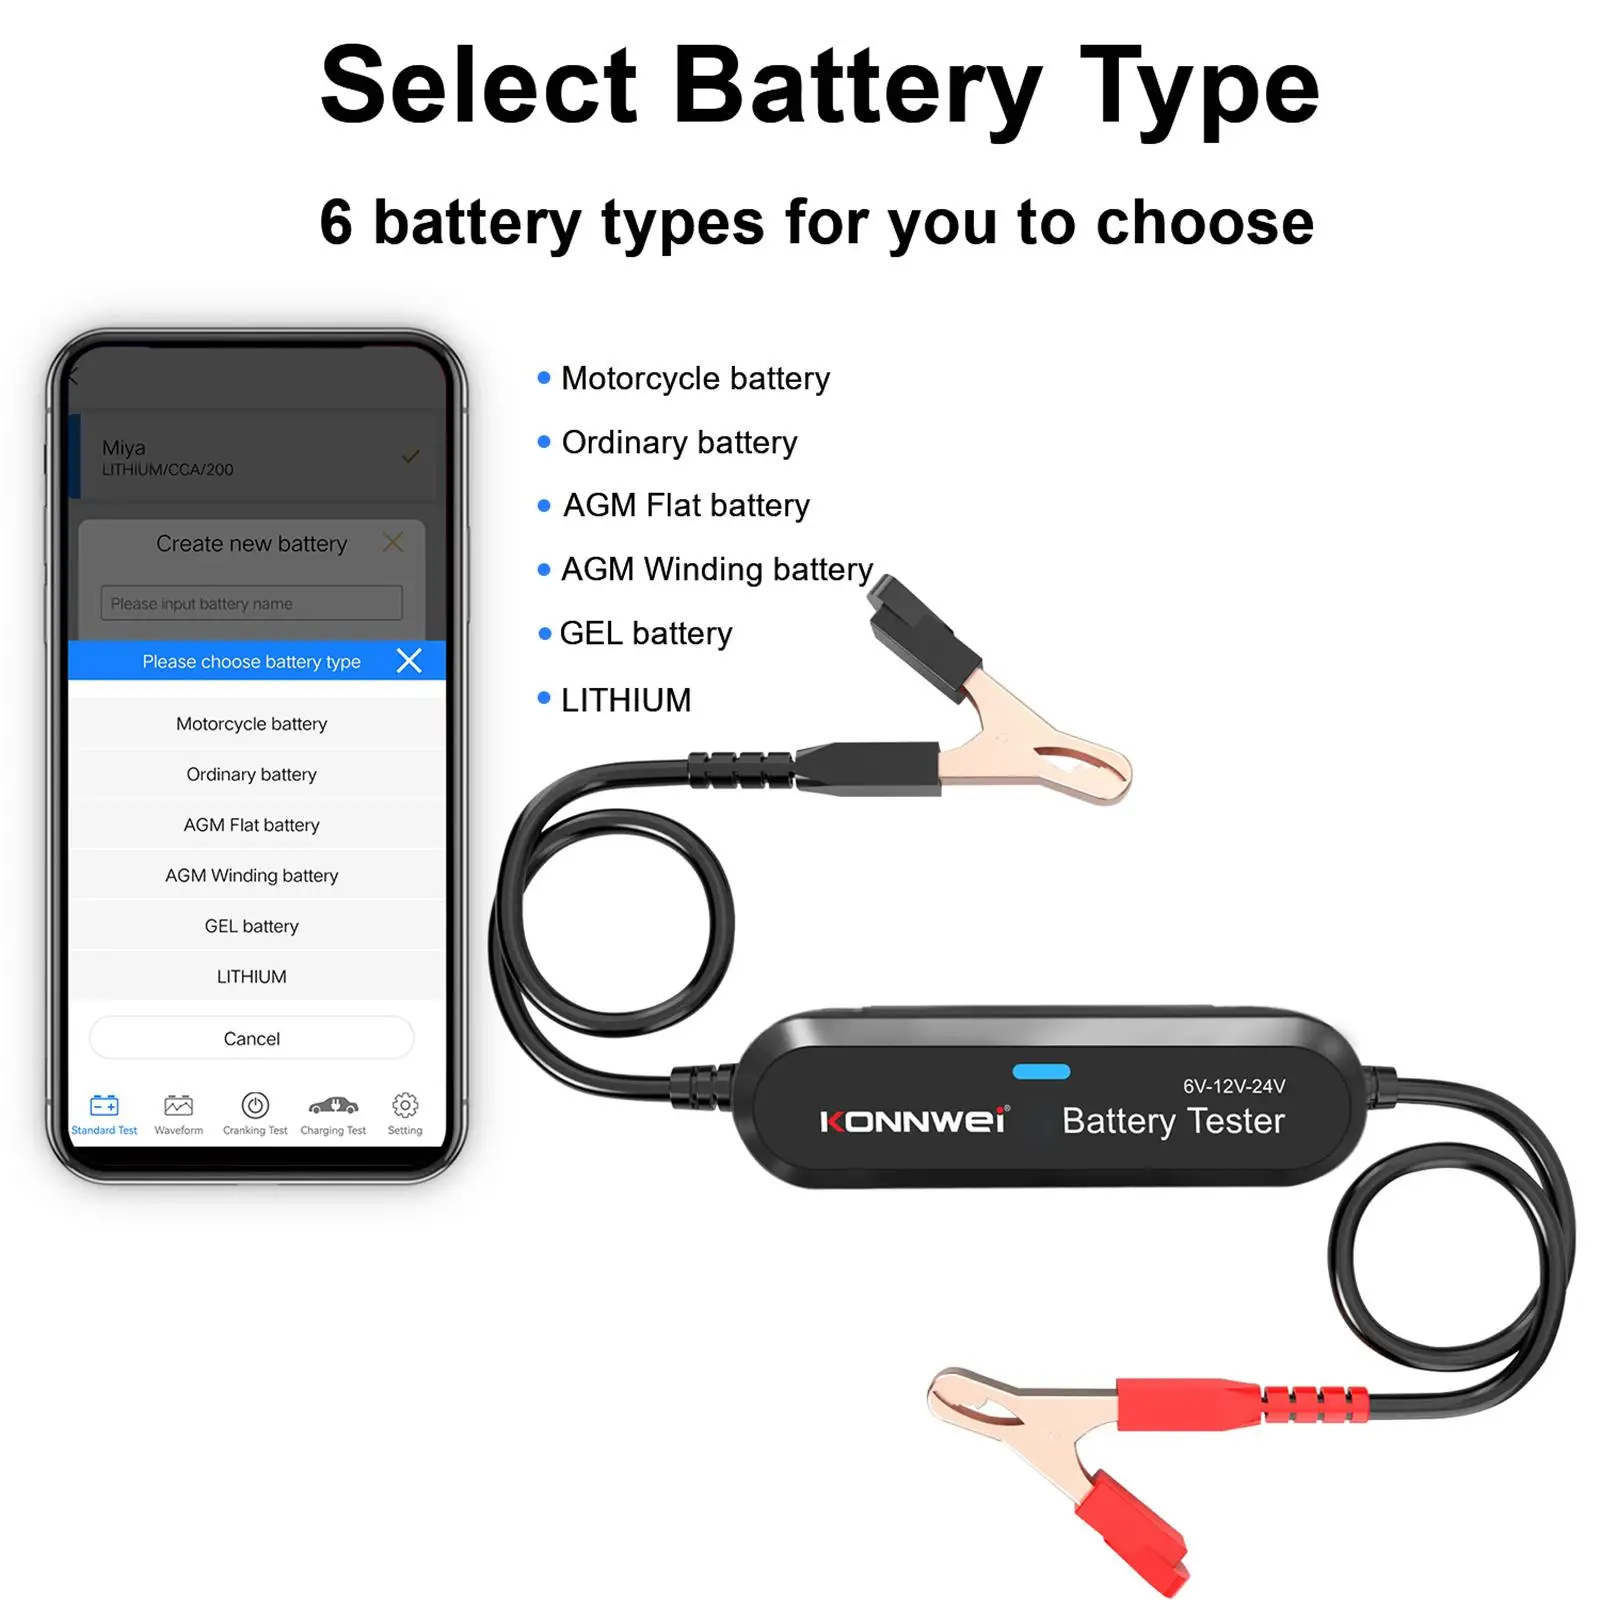 Bluetooth Car Battery Testing Tool Battery Digital 6V 12V 24V